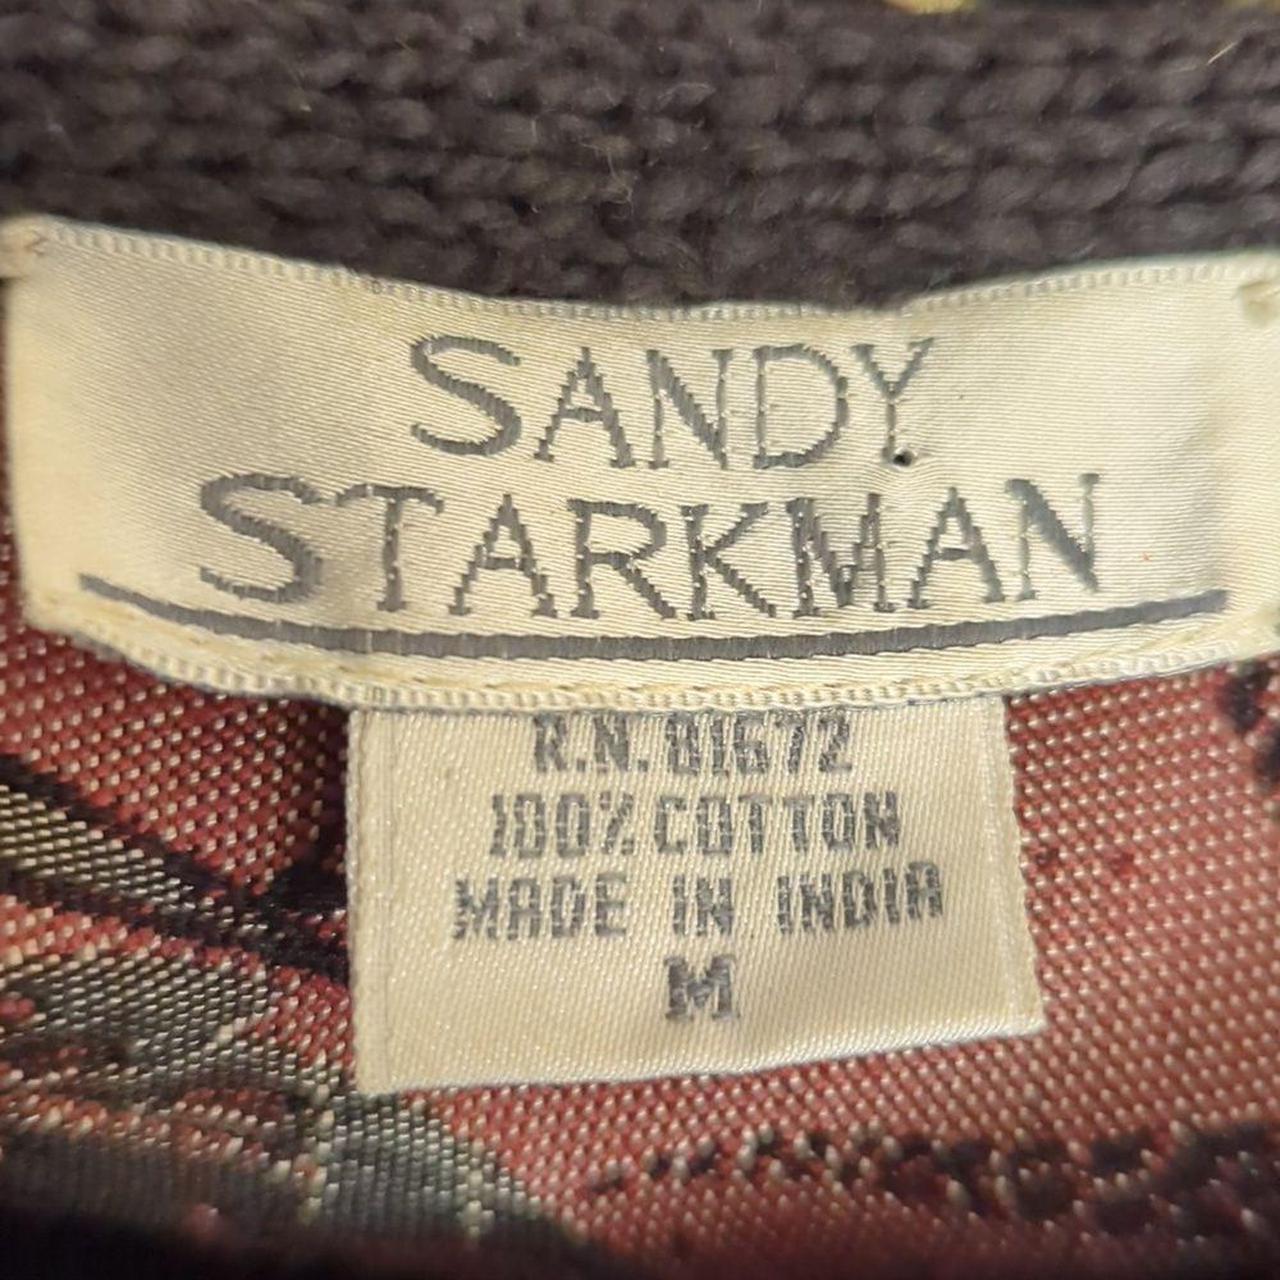 Beautiful Sandy Starkman vintage black patchwork... - Depop